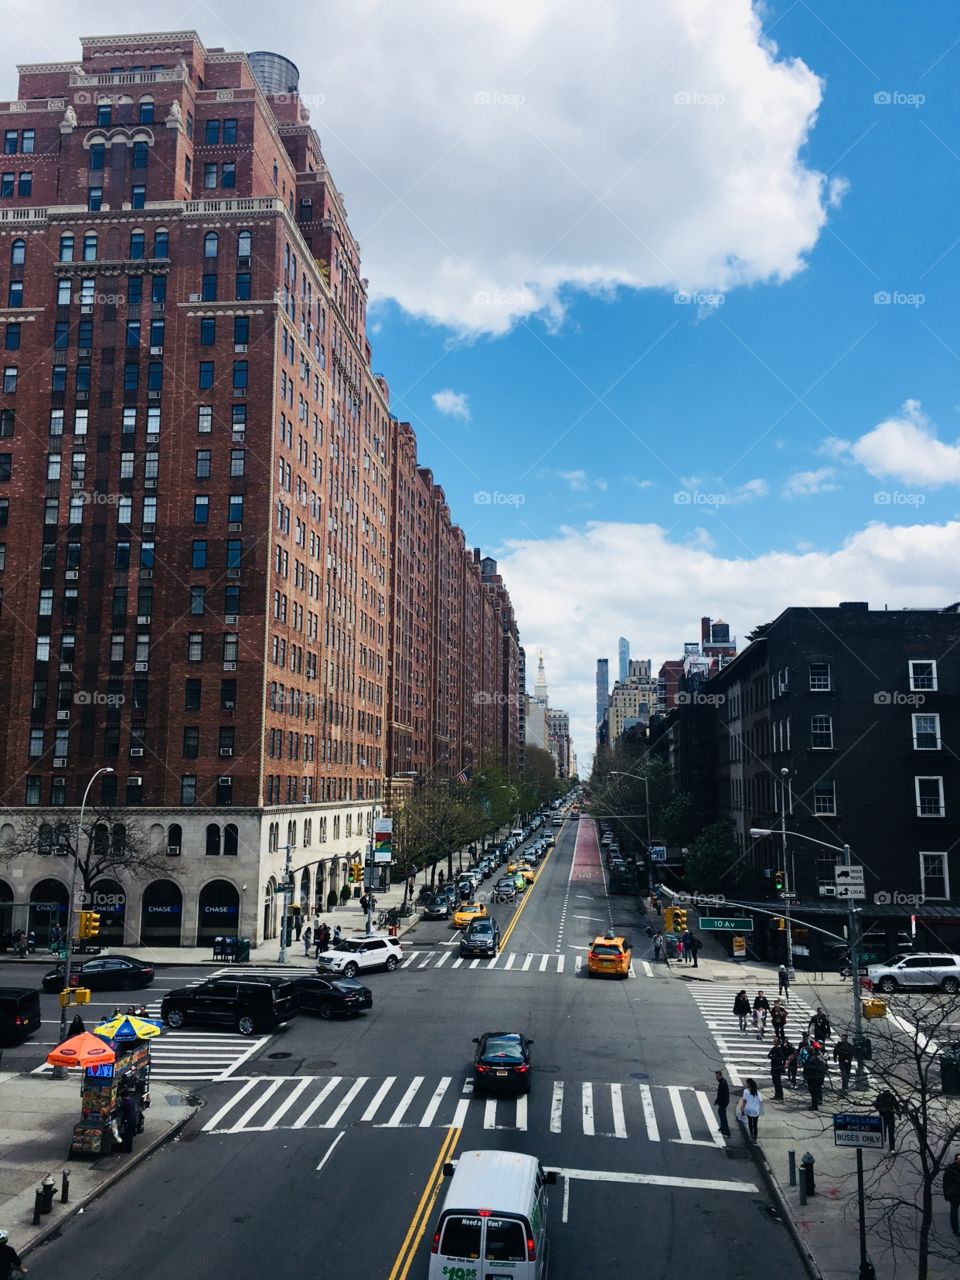 New York streets